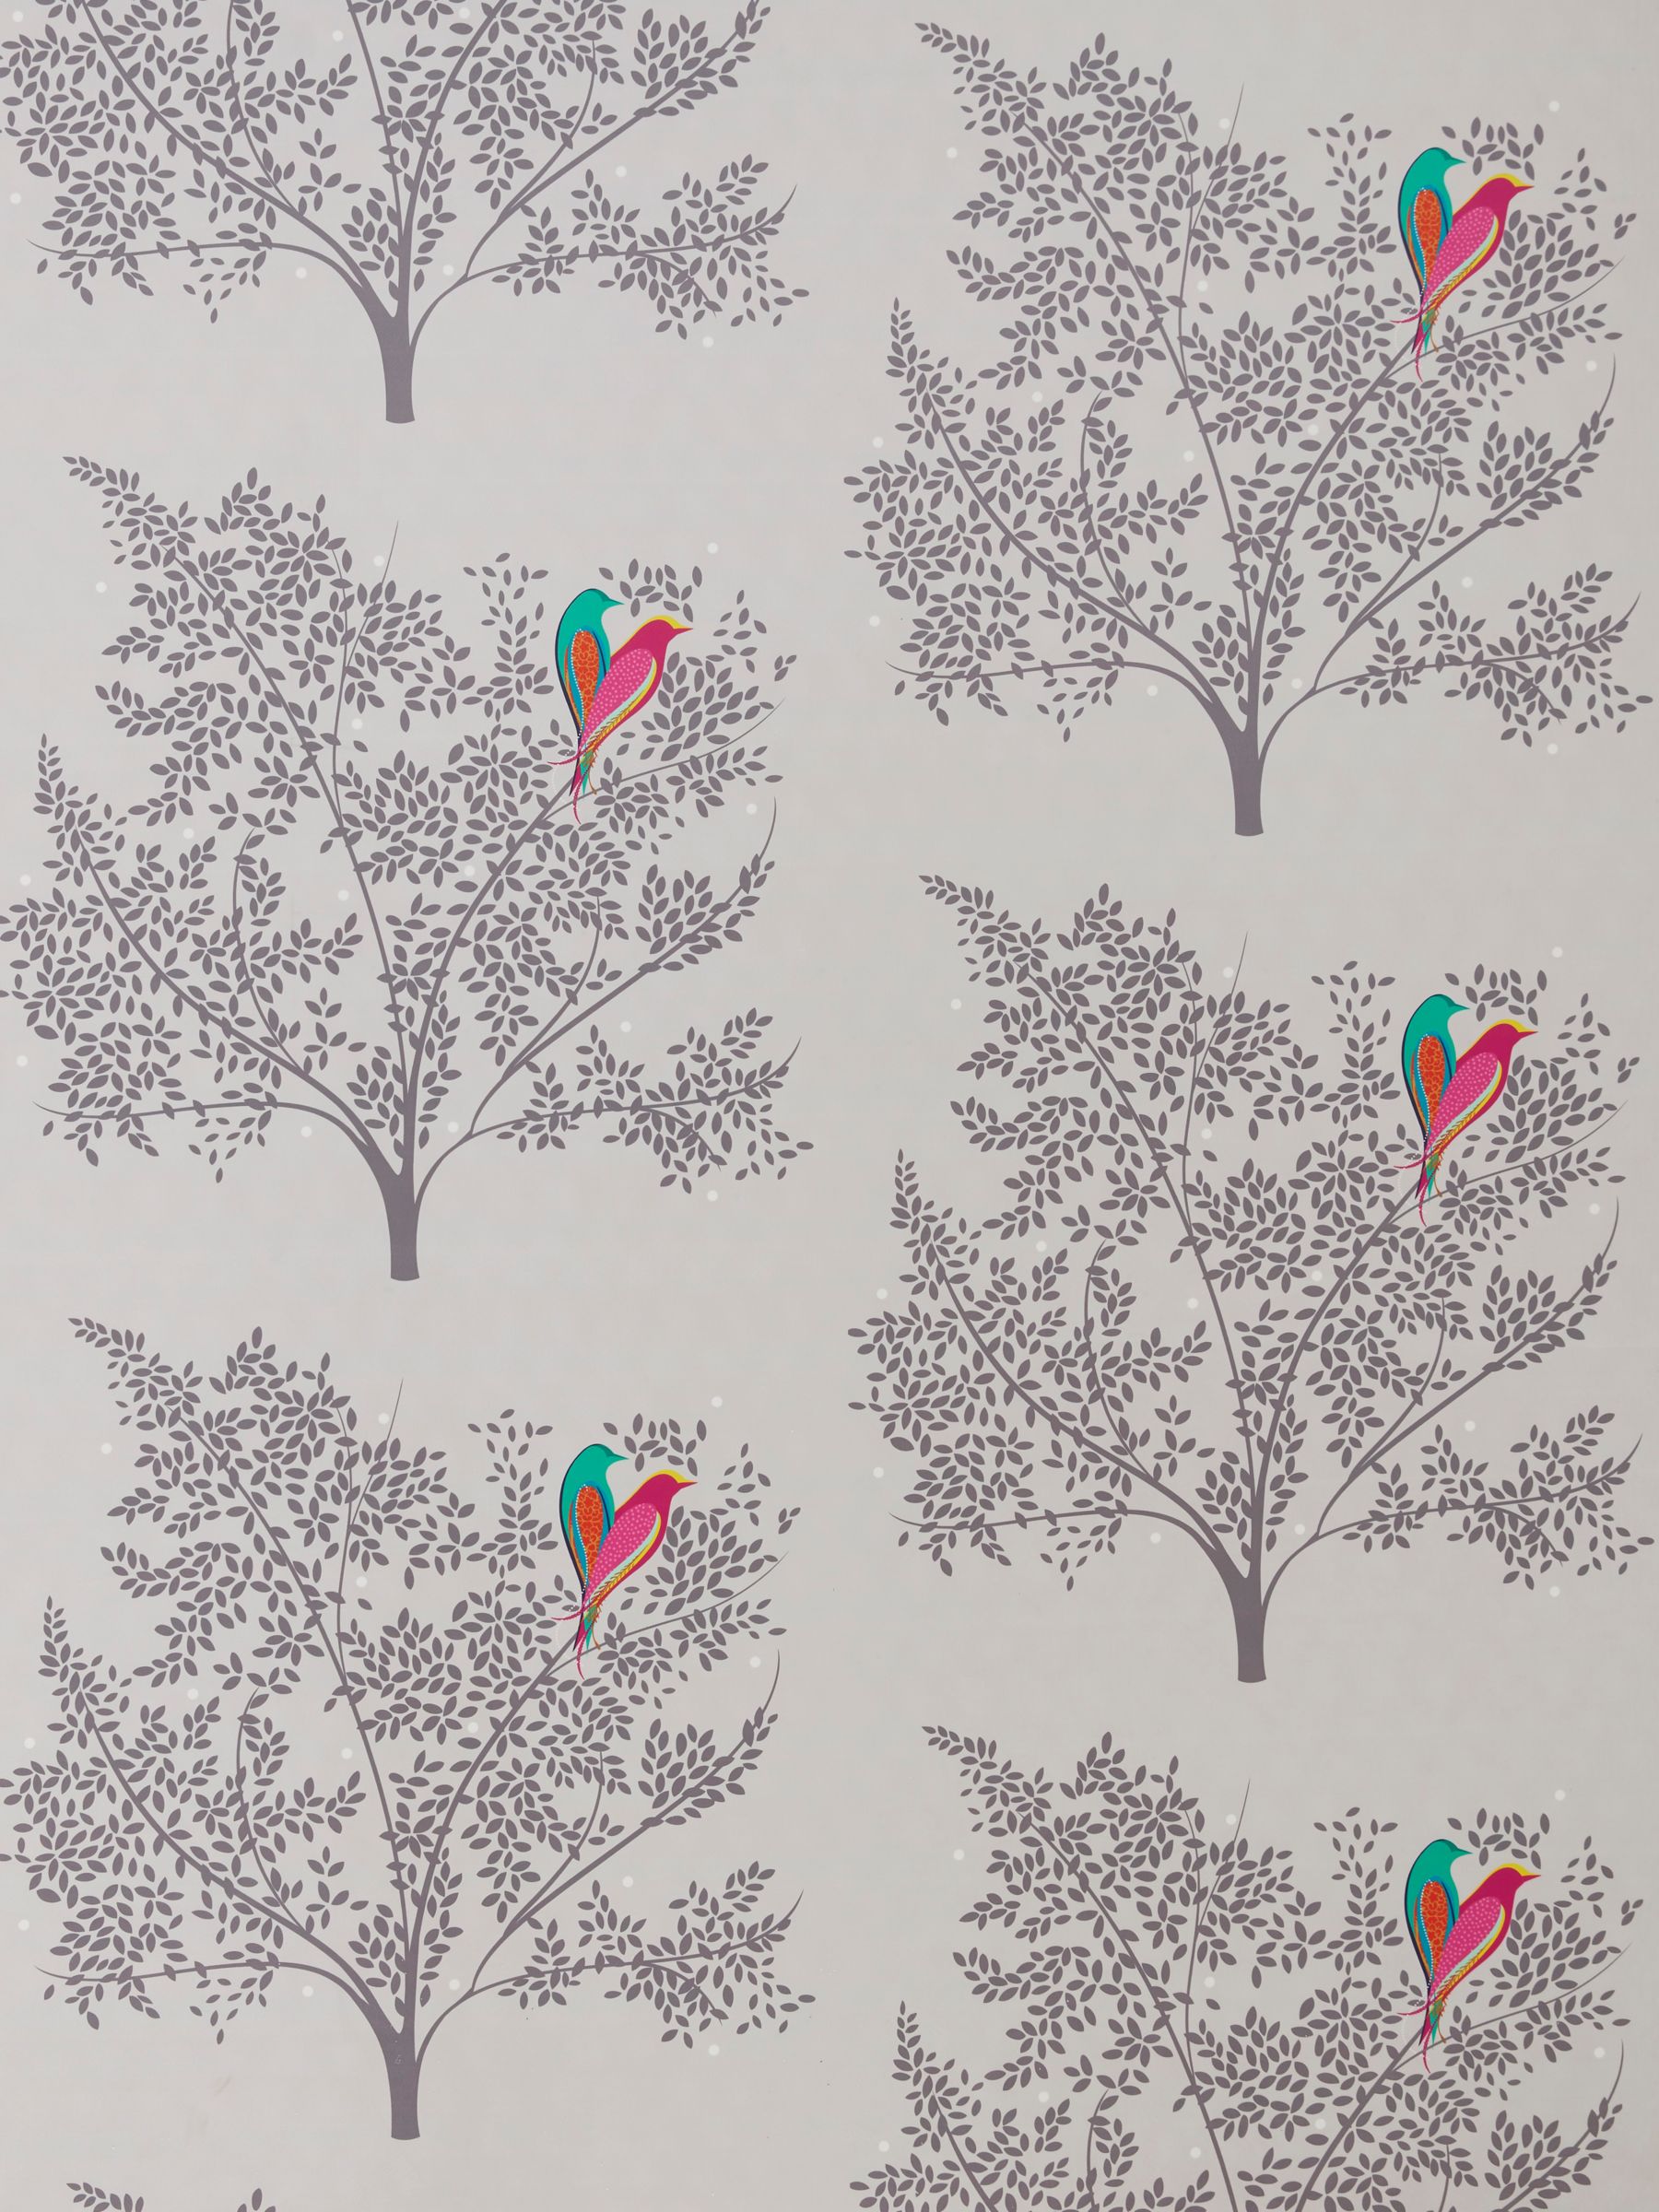 Sara Miller Love Birds Velvet Furnising Fabric, Pale Grey